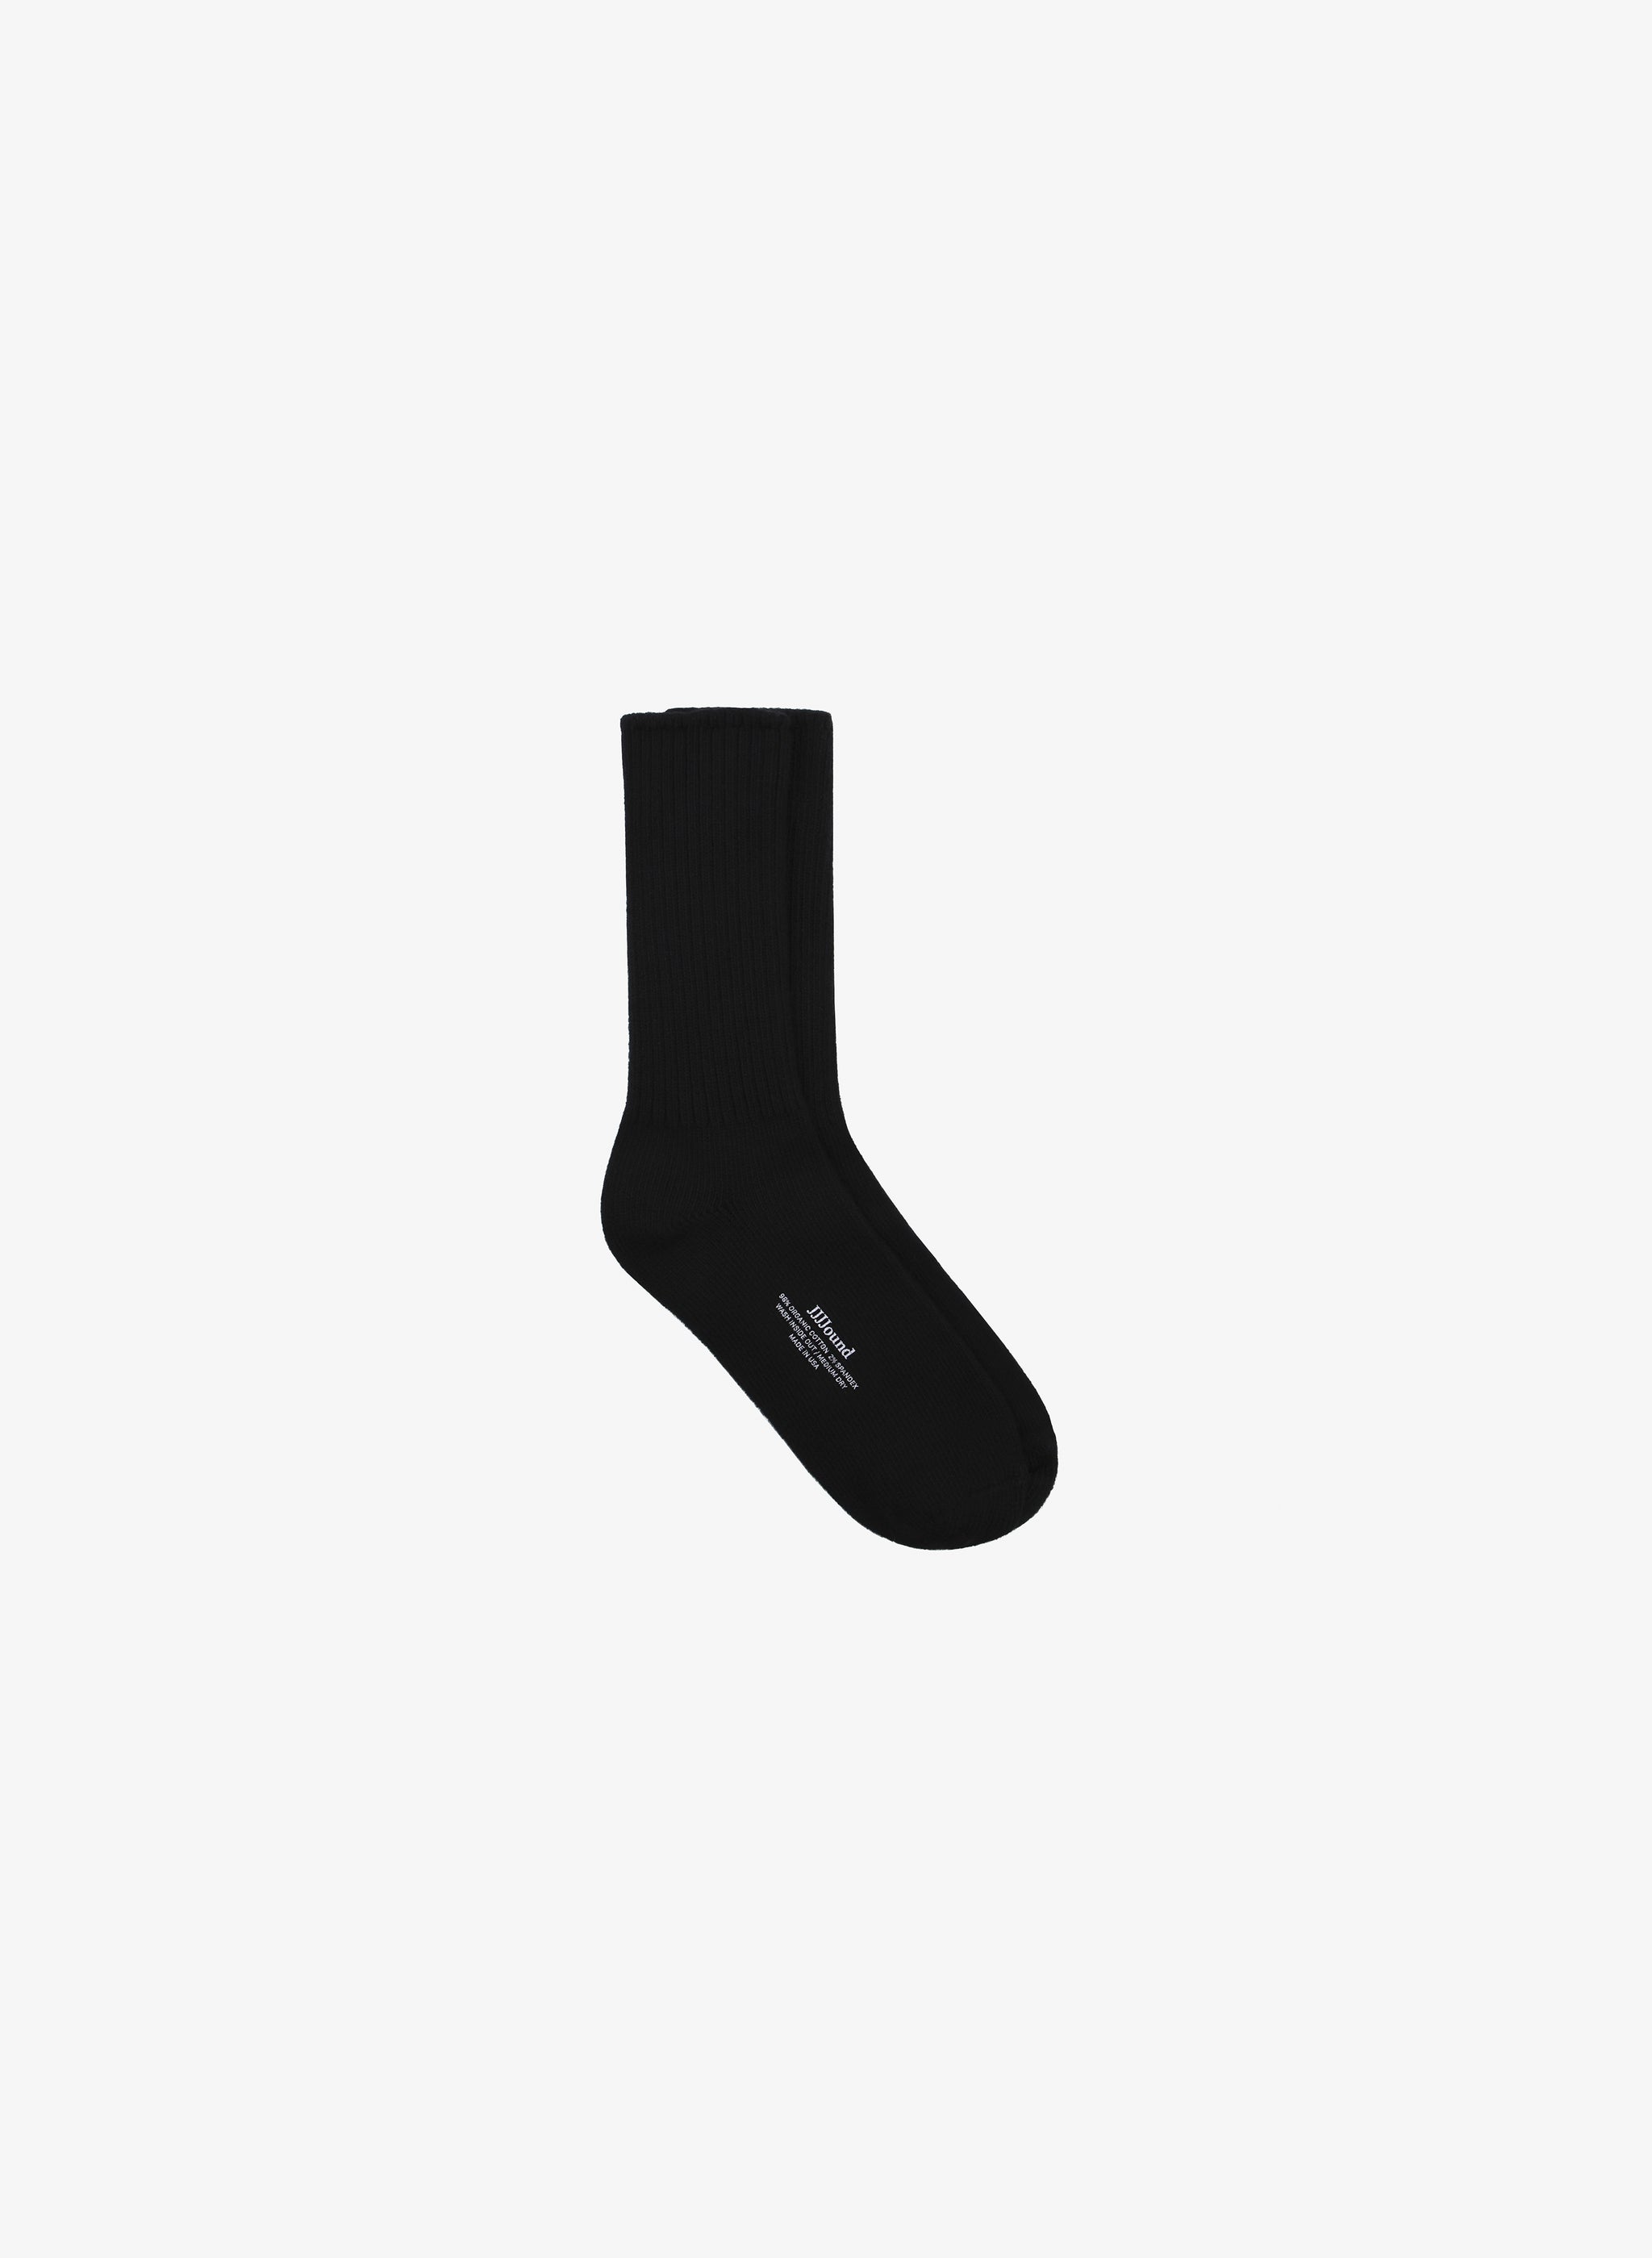 Organic Socks - Black